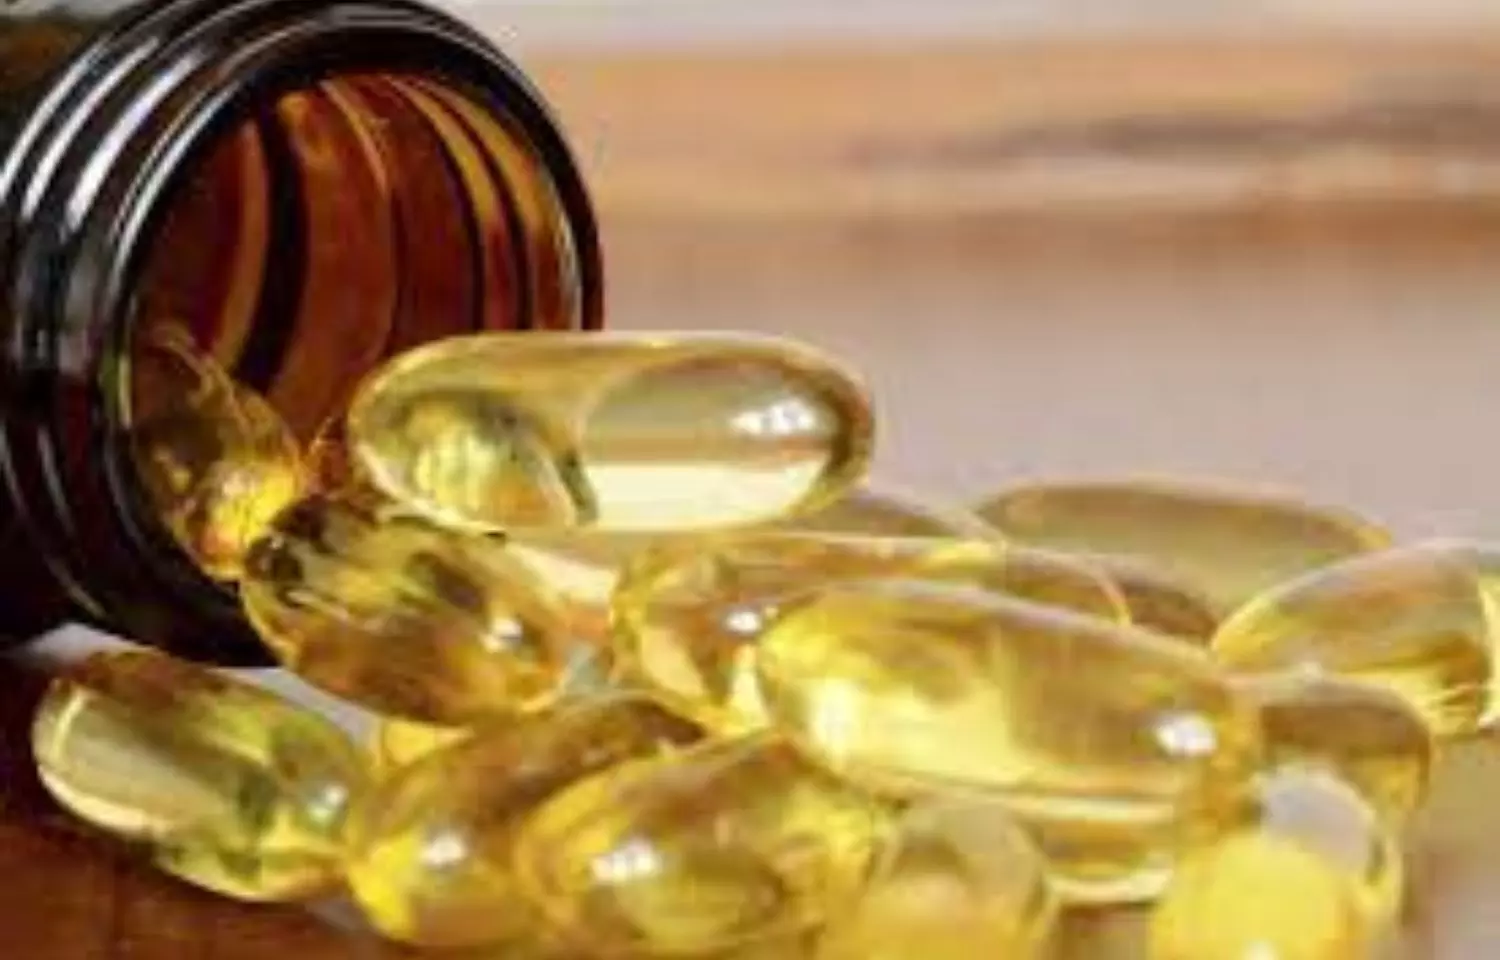 Vitamins, supplements no magic pills to prevent CVD, Cancer: USPSTF